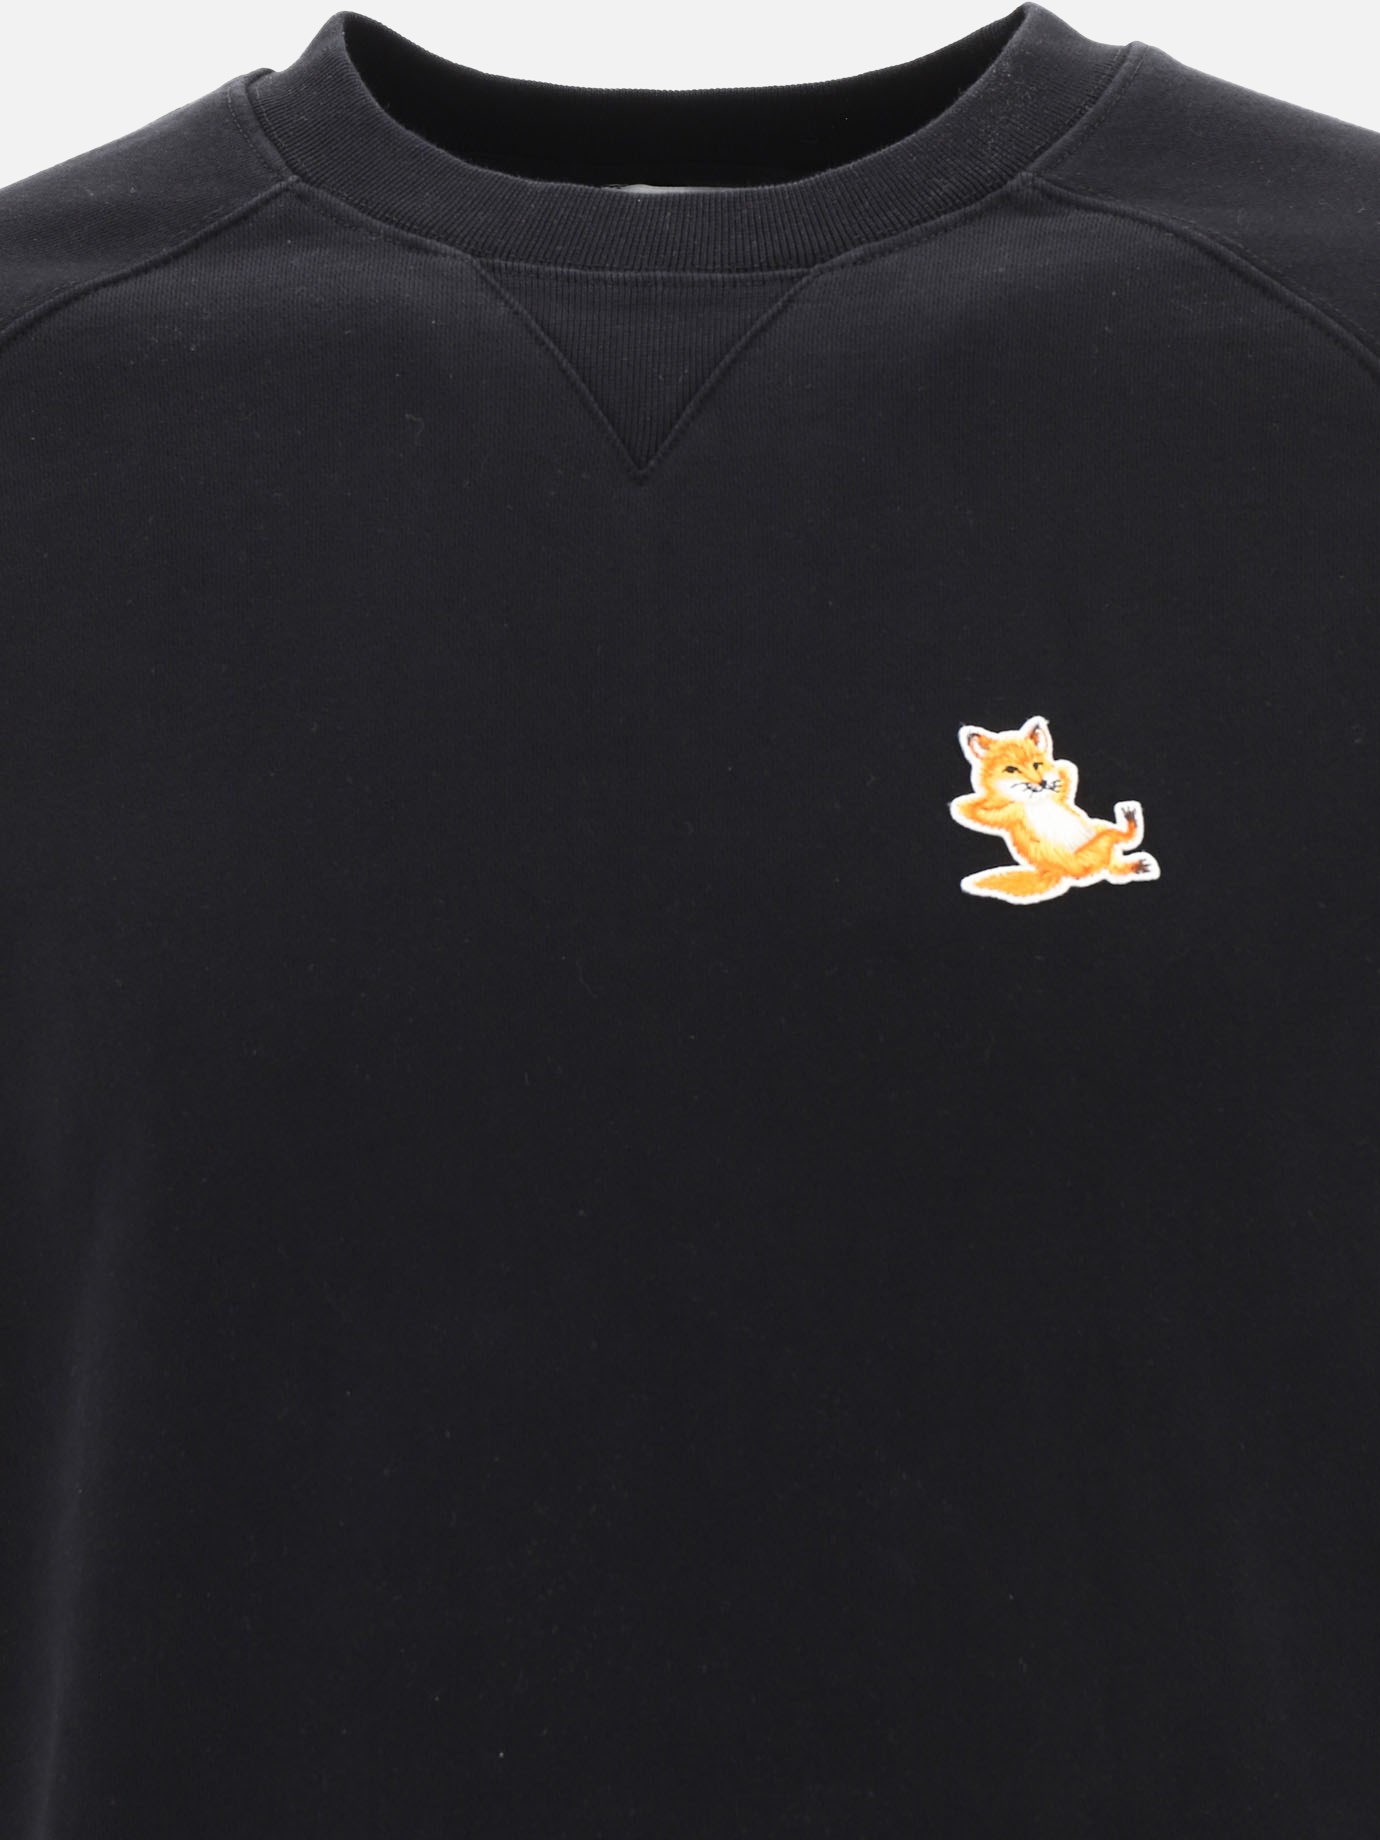  Chillax Fox  sweatshirt by Maison Kitsuné